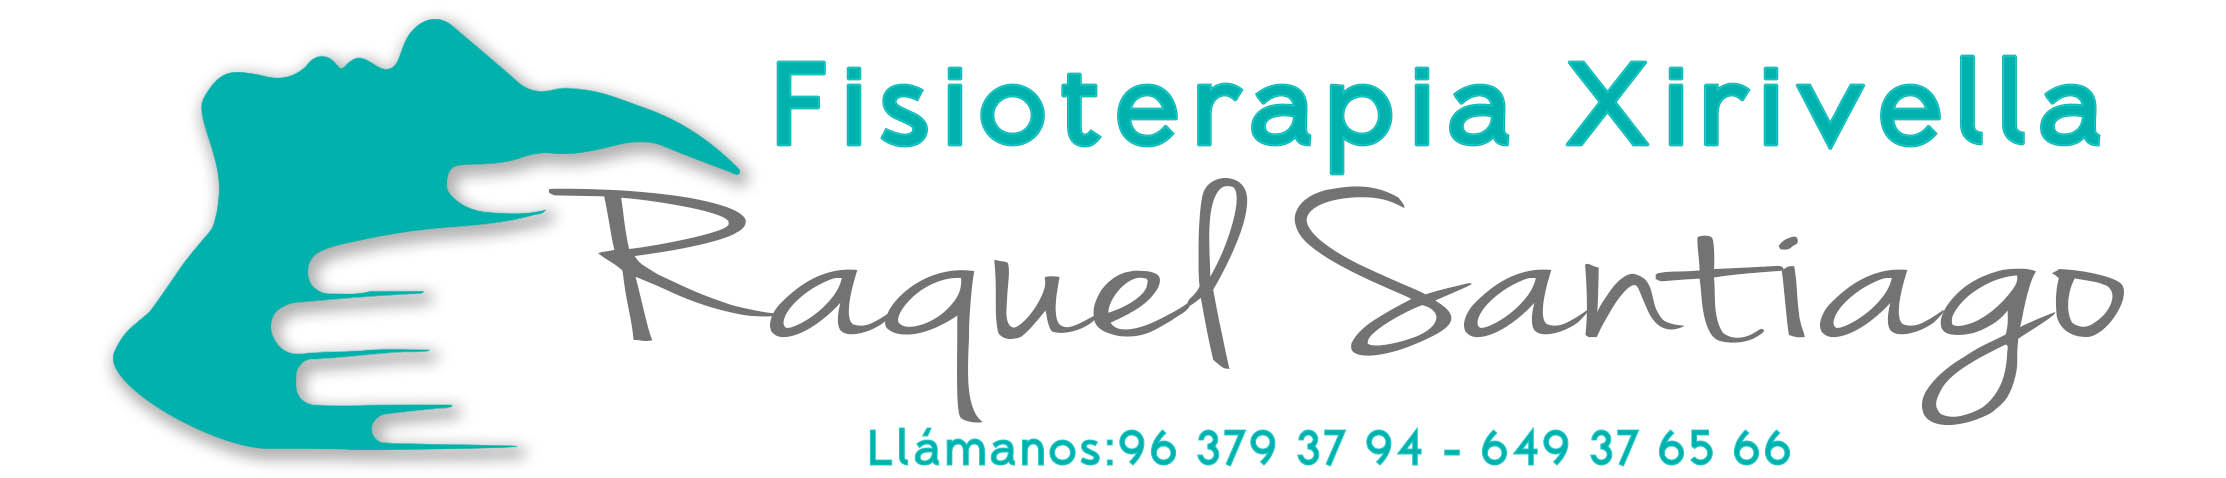 Fisioterapia Xirivella logo